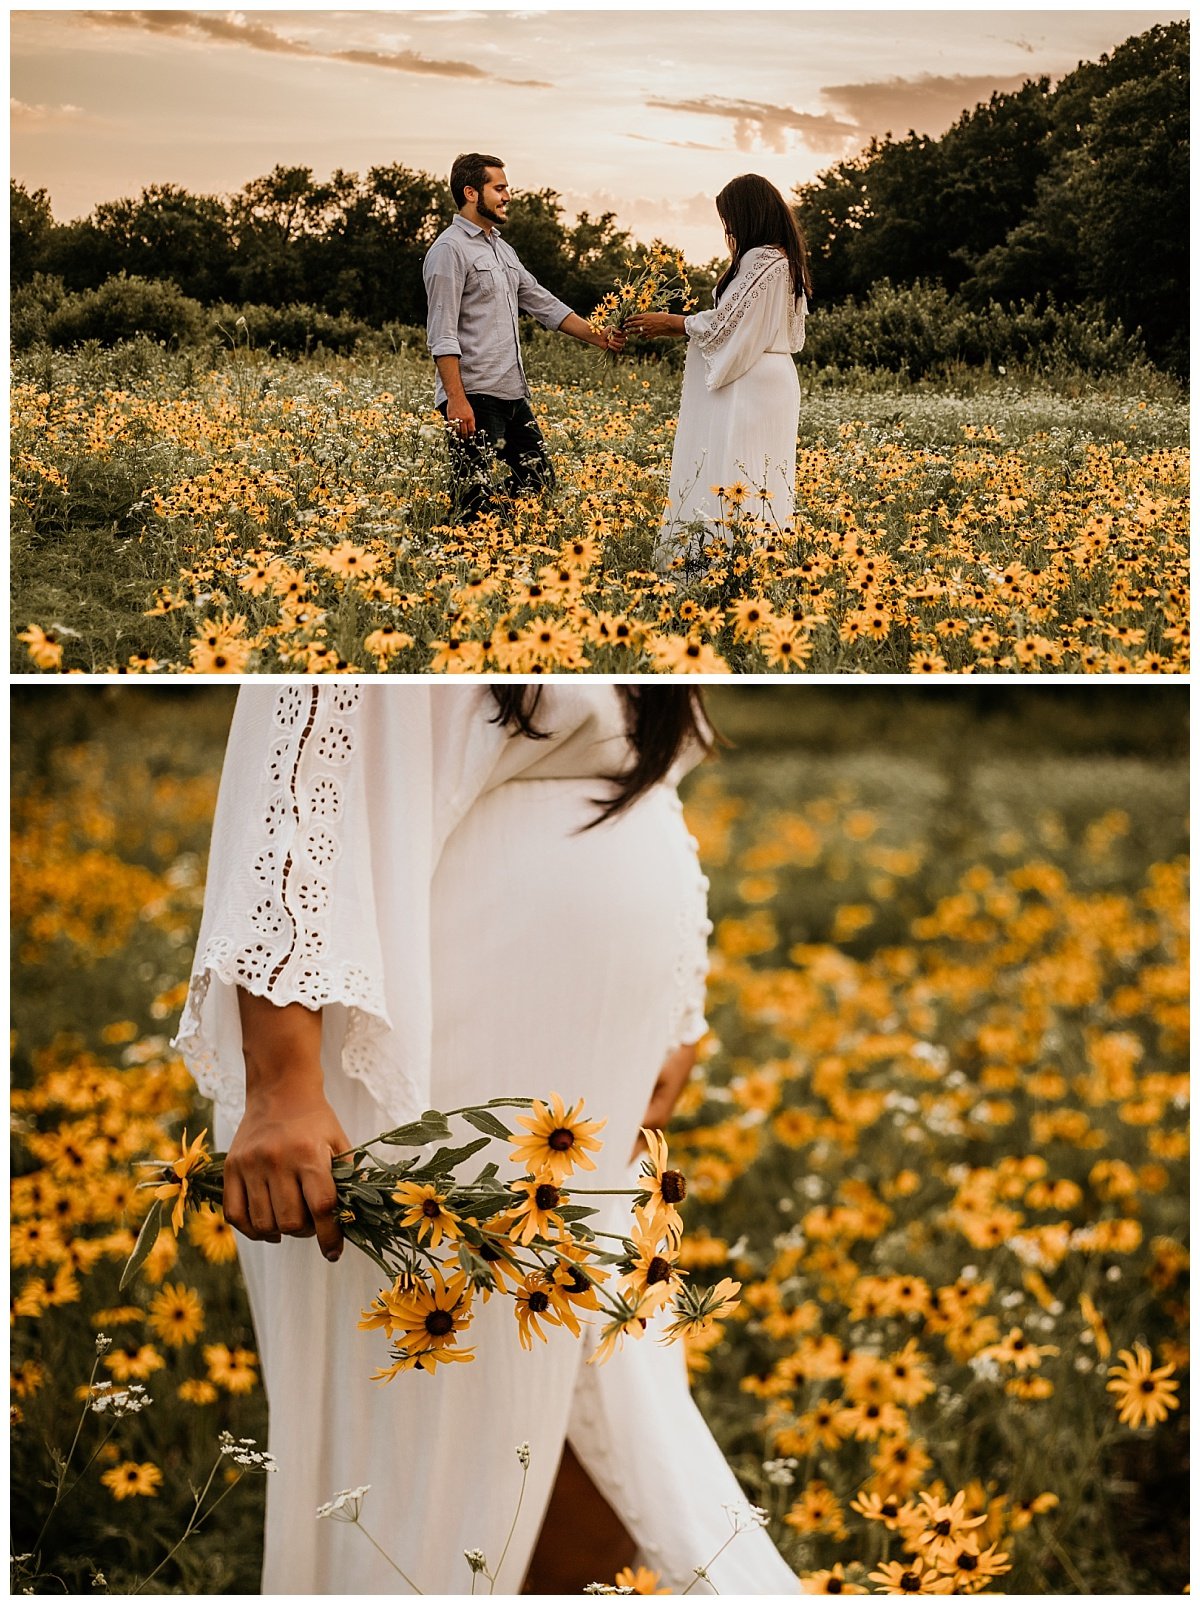 Boho+Maternity+_+Kansas+City+Maternity+Photography+_+Fillyboo+_+Summer+Maternity+Photos+_+Wildflower+Photos+_+Fillyboo+Maternity (17).jpeg